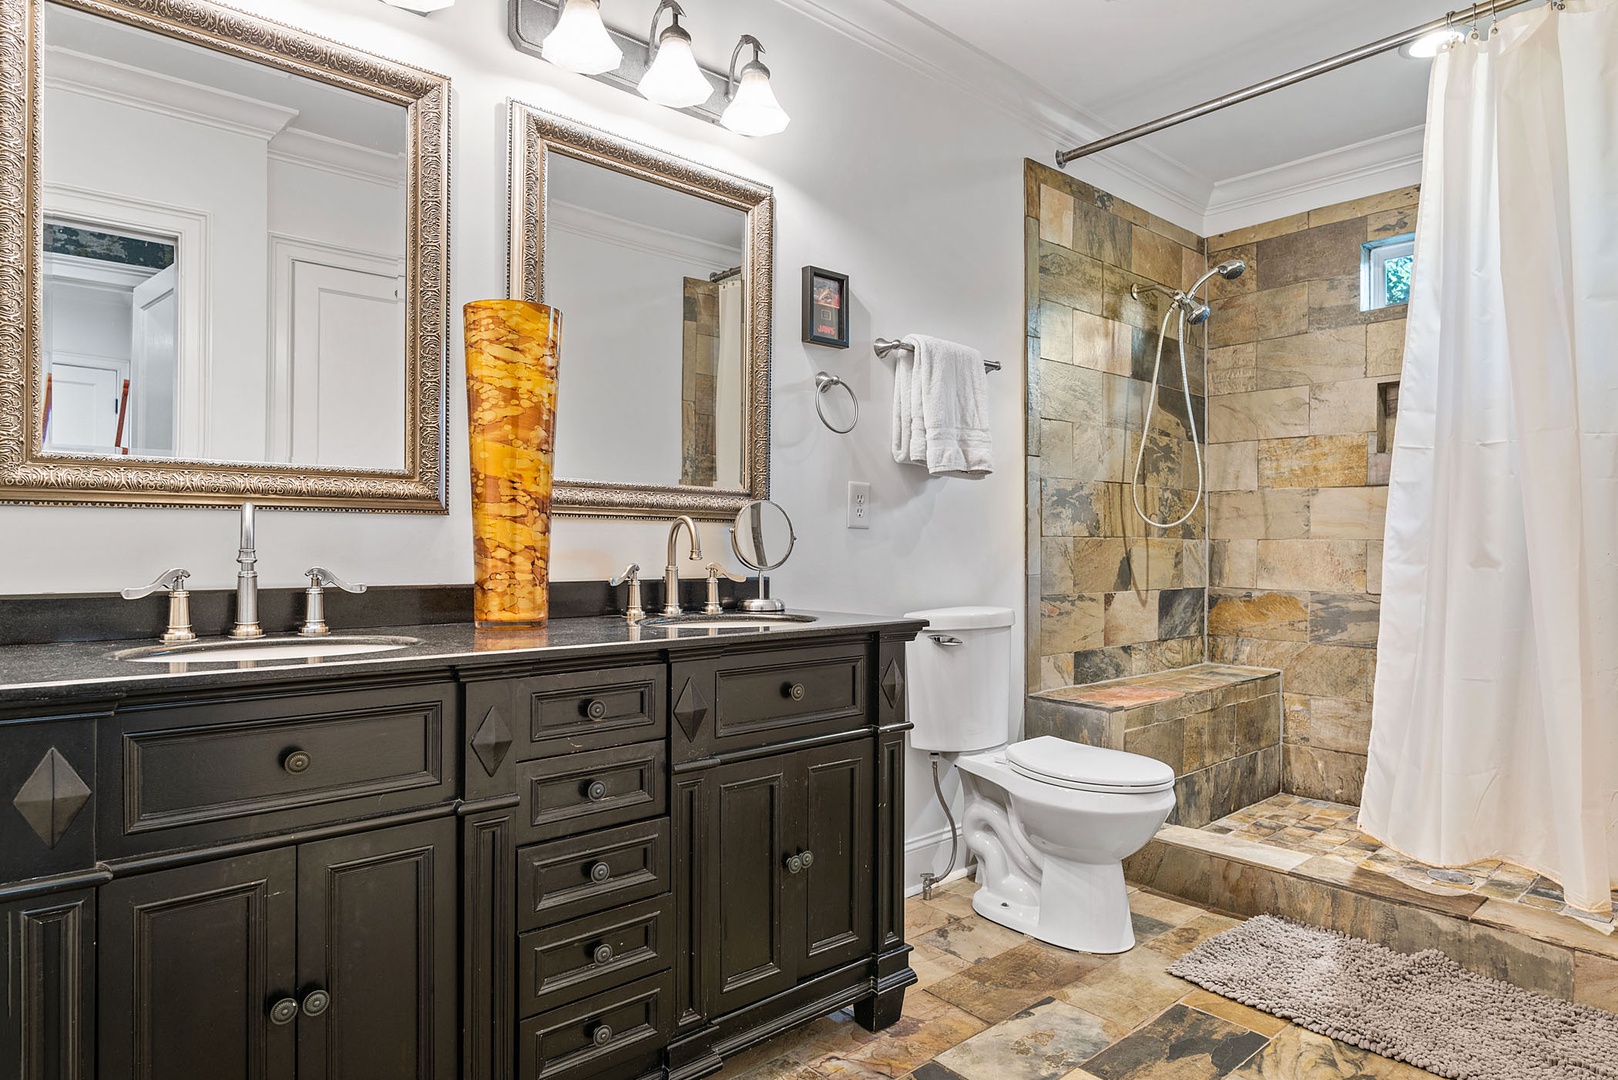 The en suite includes a double vanity & walk-in shower